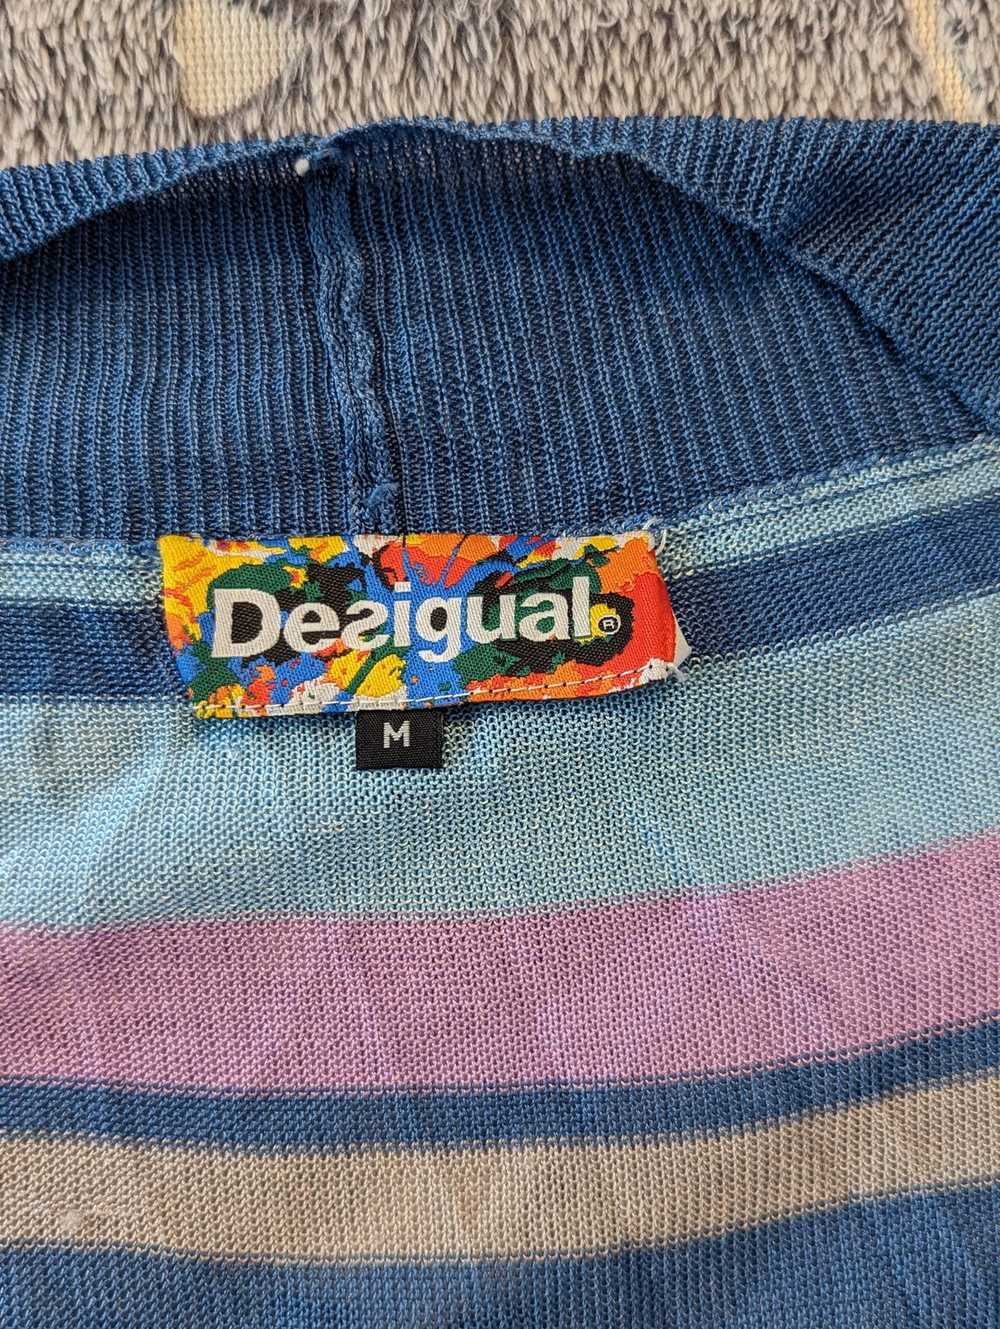 Desigual Degusal Women's Open Front Knit Tunic Ki… - image 2